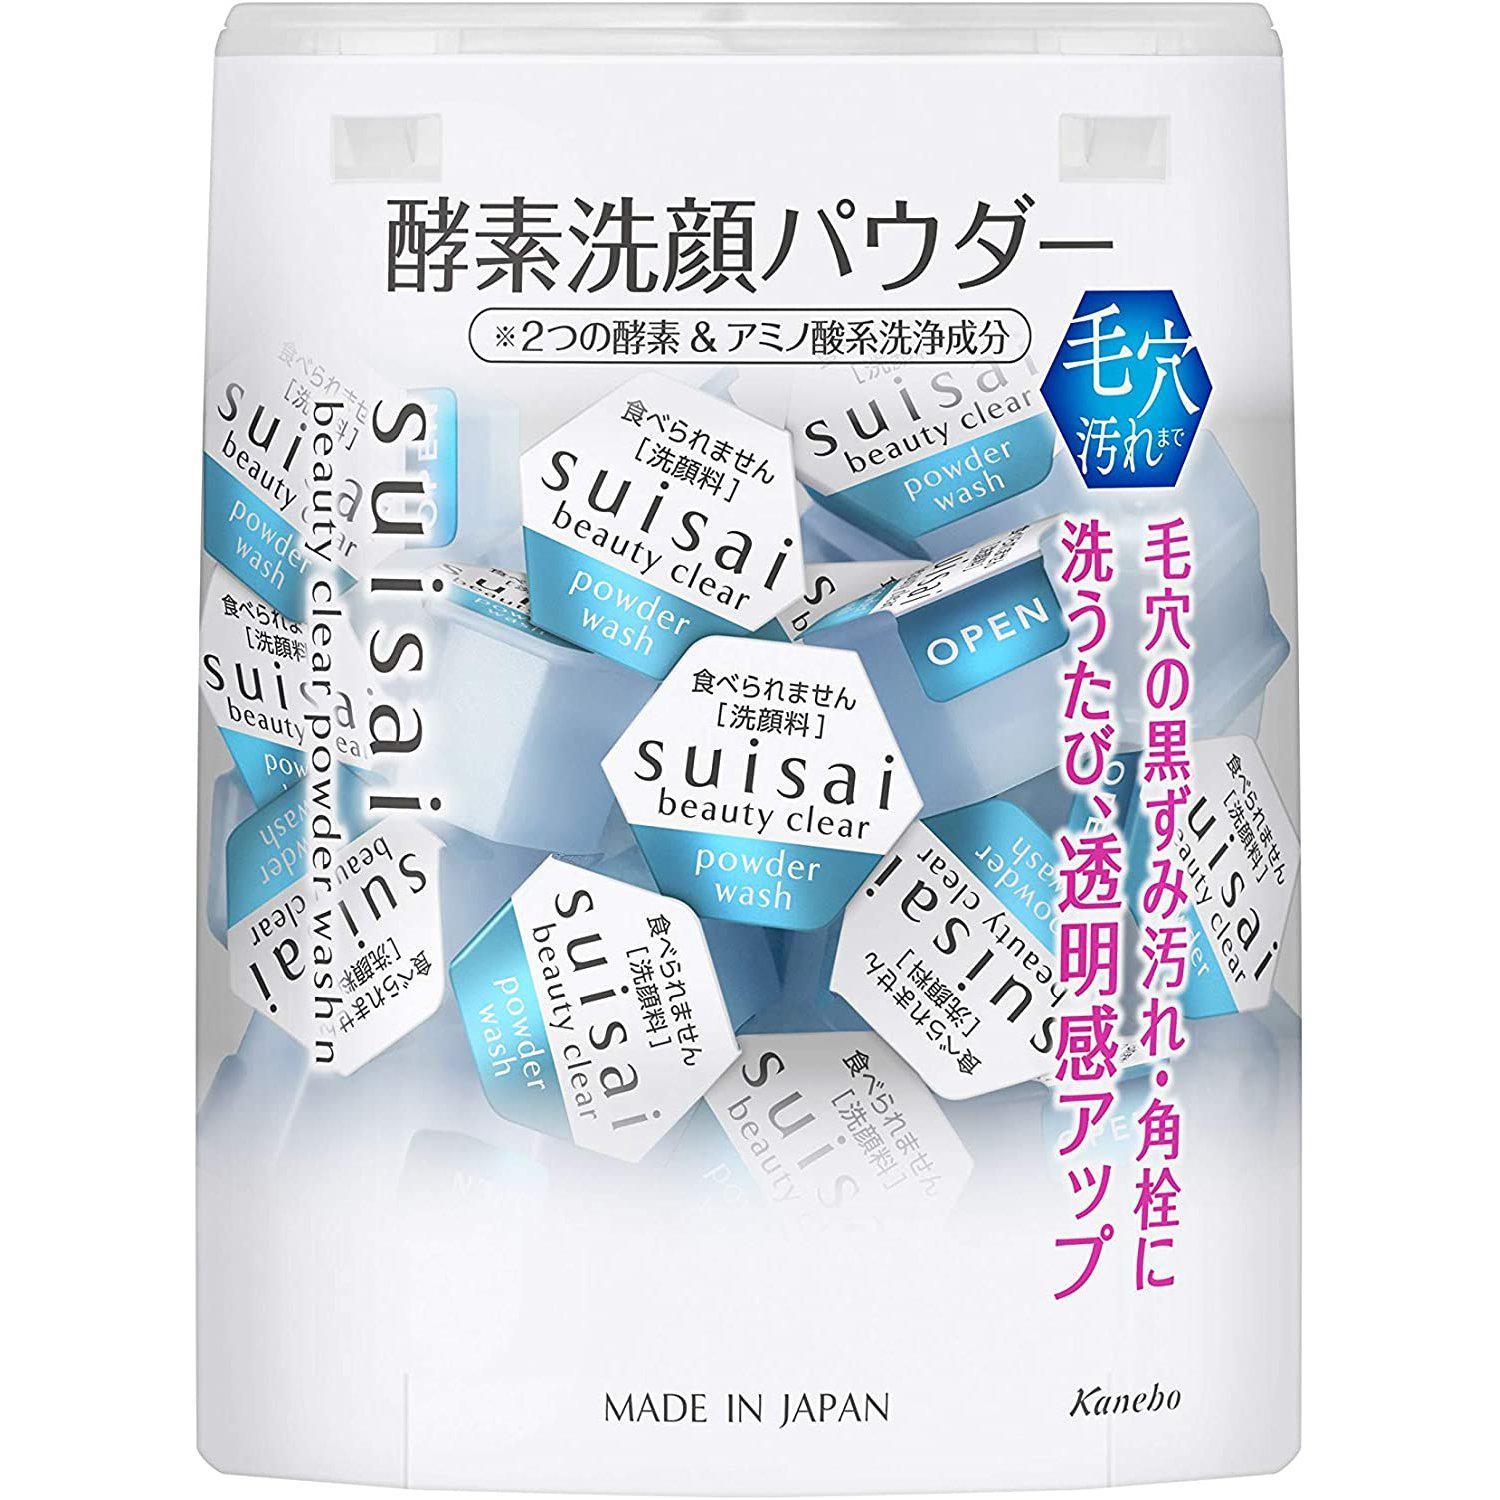 Kanebo Suisai Beauty Clear Powder Facial Wash 0.4g x 32pcs, Japanese Taste